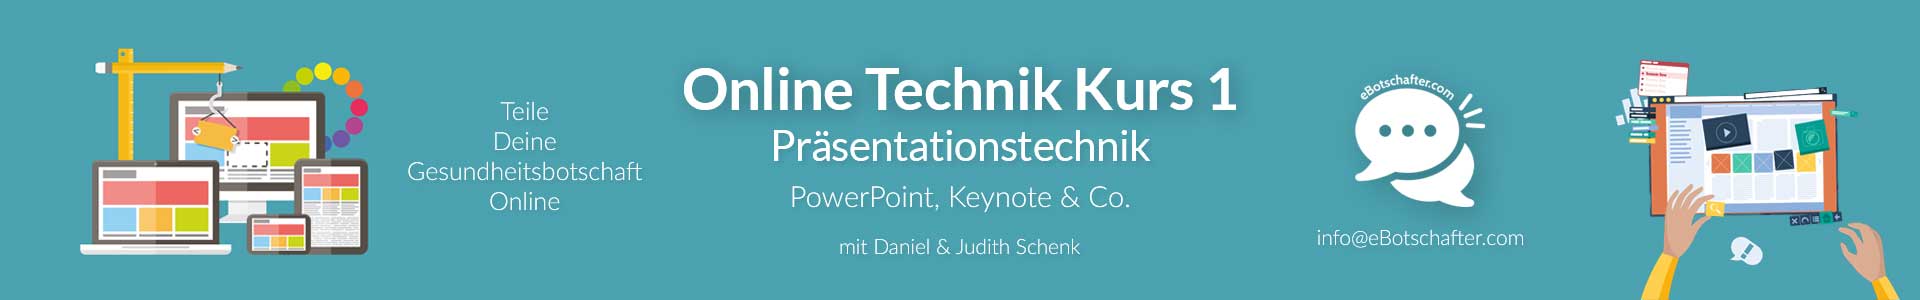 ebotschafter.com - Daniel Schenk - Kurs EB01 - Online Technik 1 - Präsentationen - LP Banner - C1